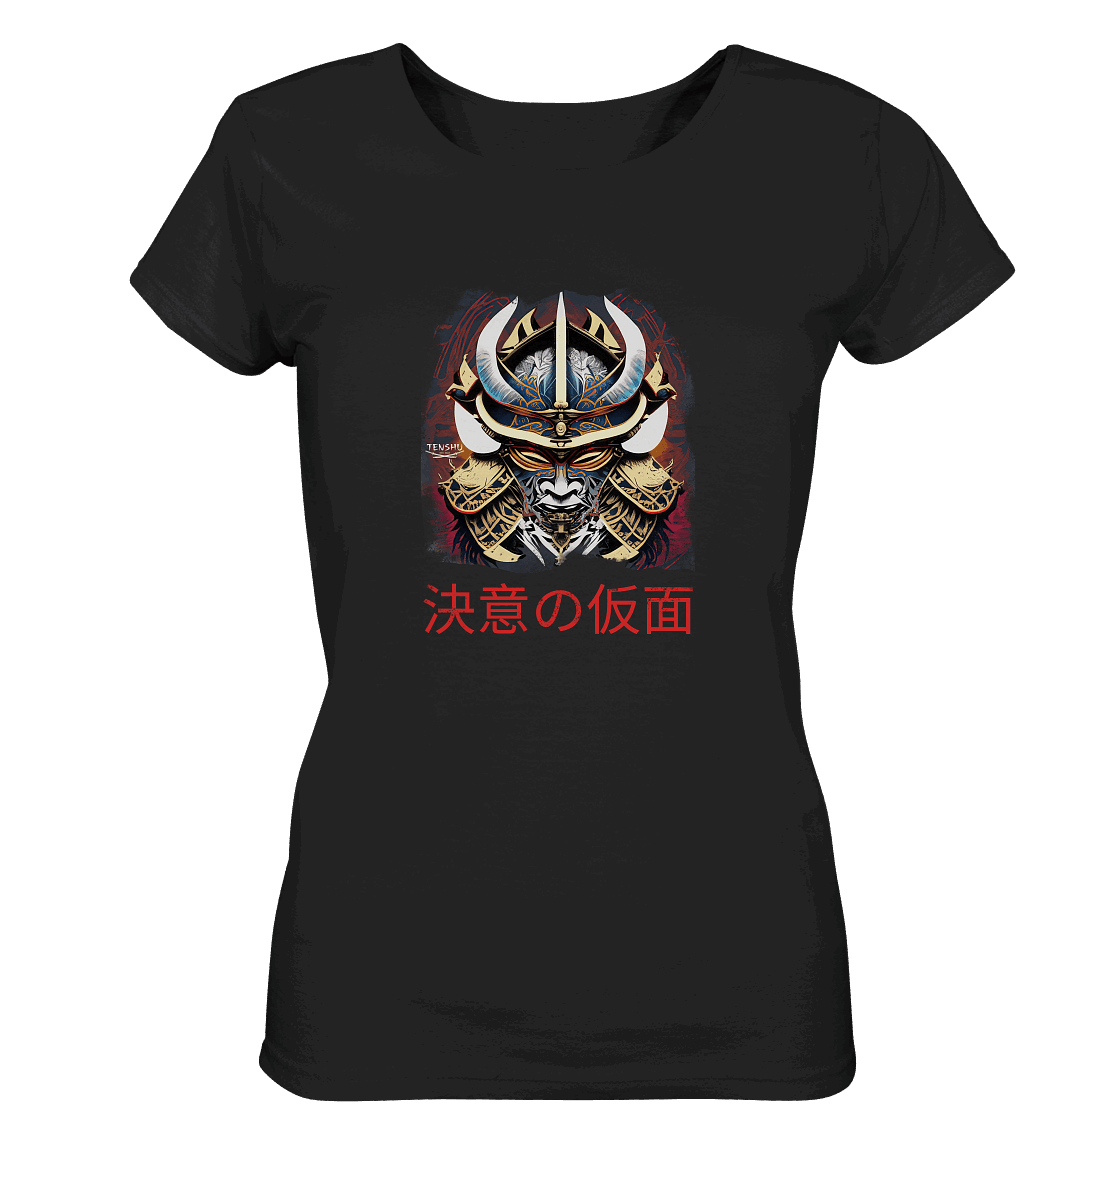 Tenshu / Maske der Entschlossenheit - Ladies Organic Shirt